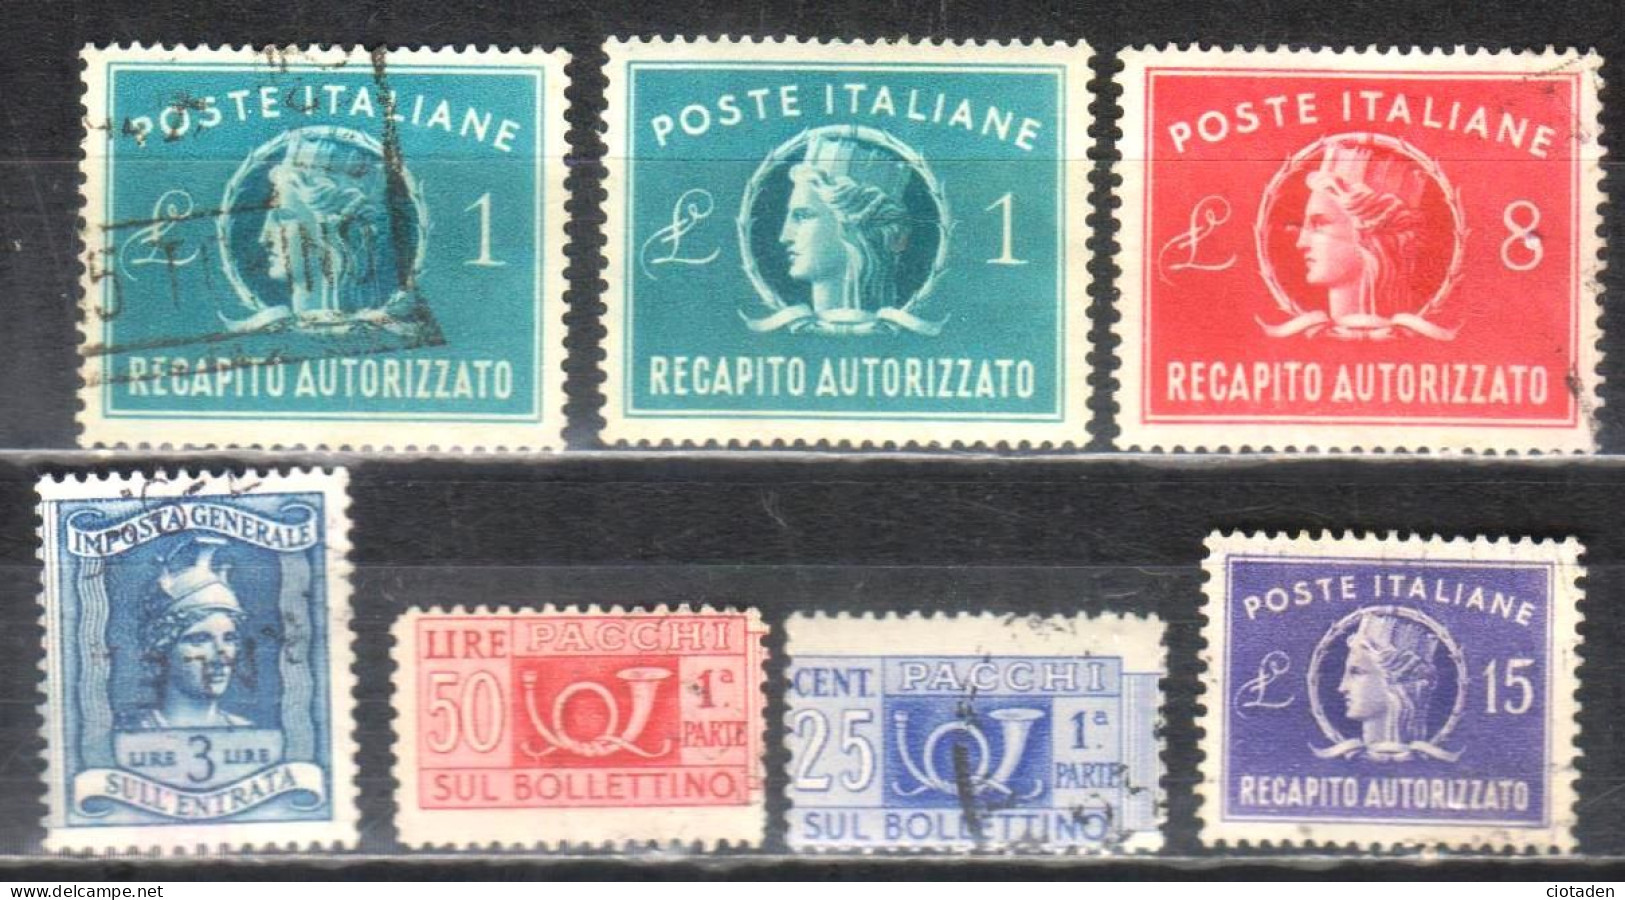 ITALIE - Timbres Fiscaux - Revenue Stamps